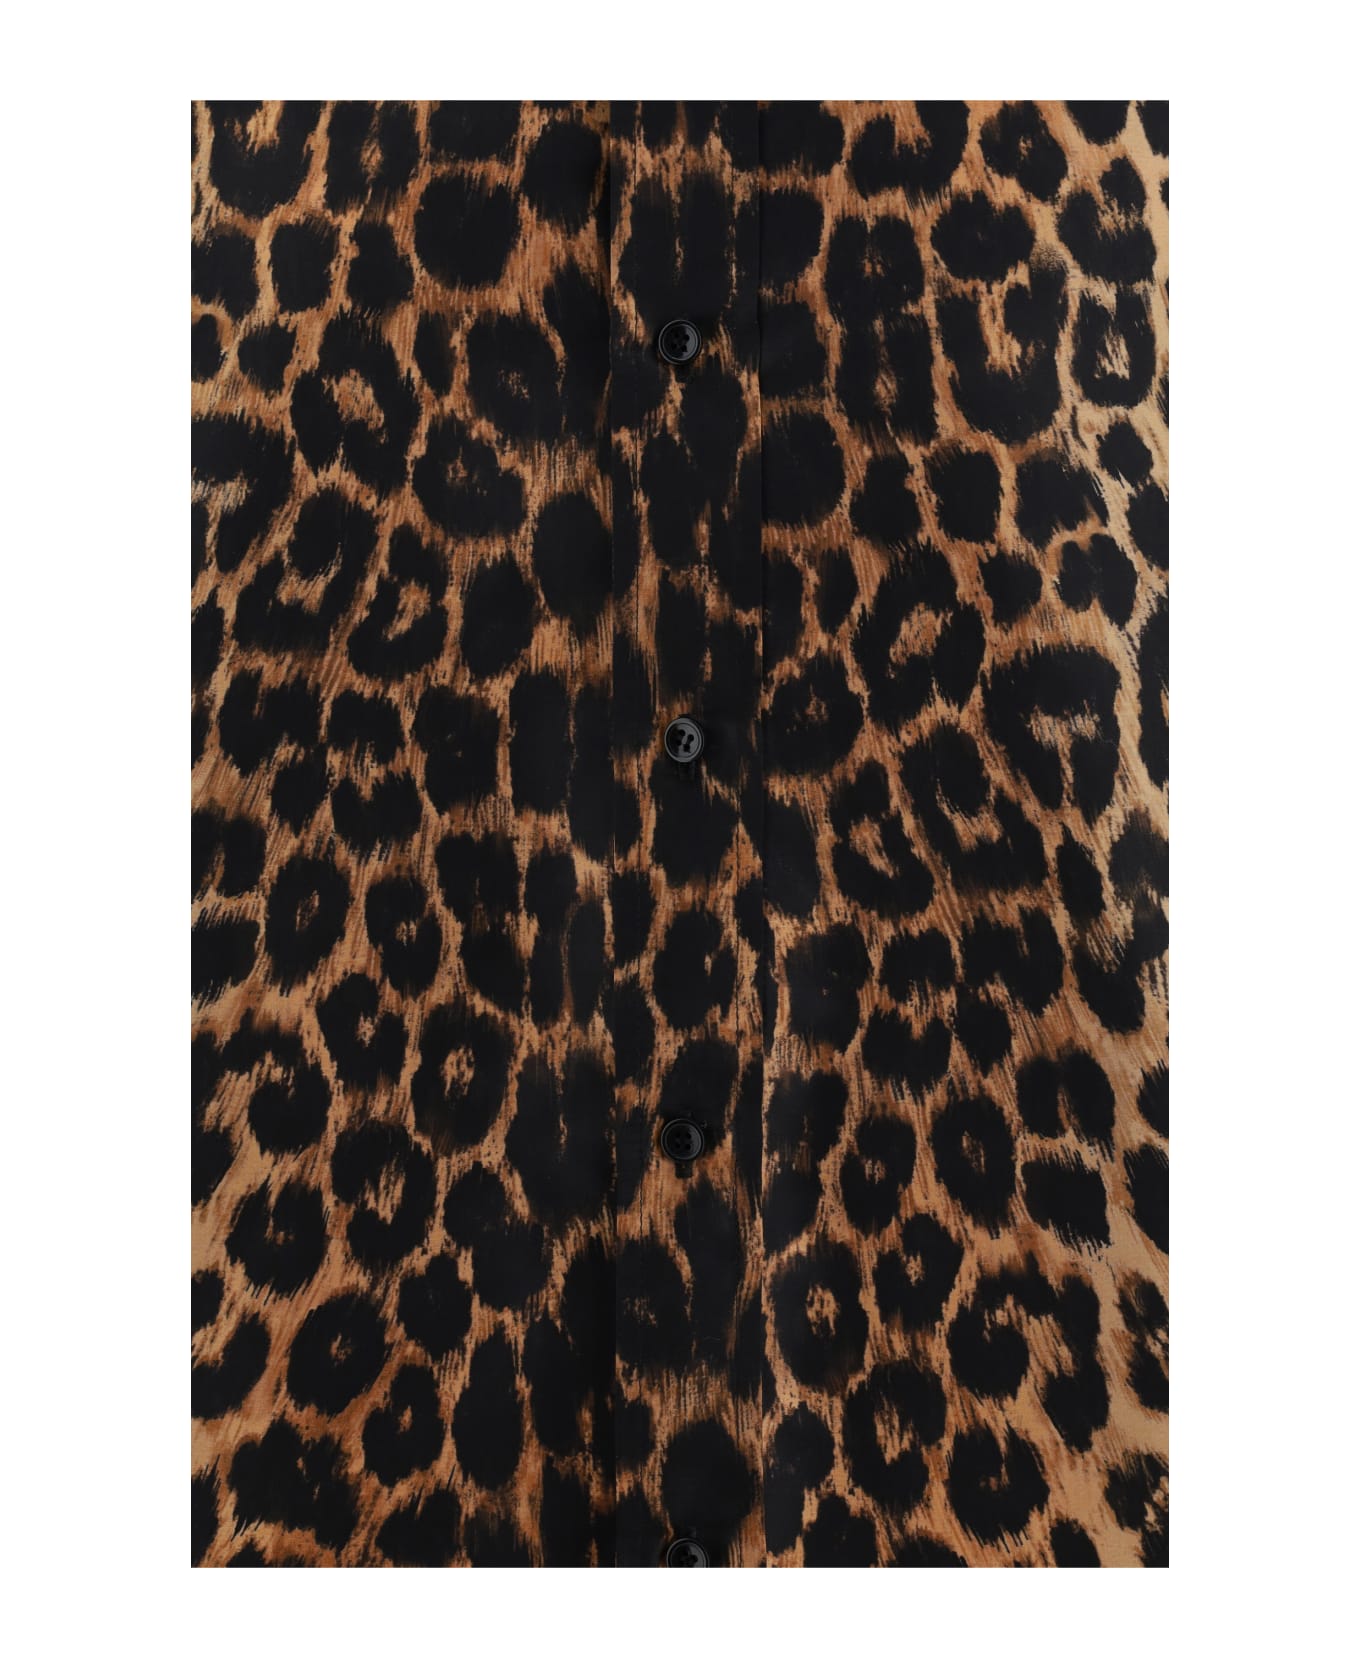 Saint Laurent Leopard Print Taffeta Shirt - Fauve